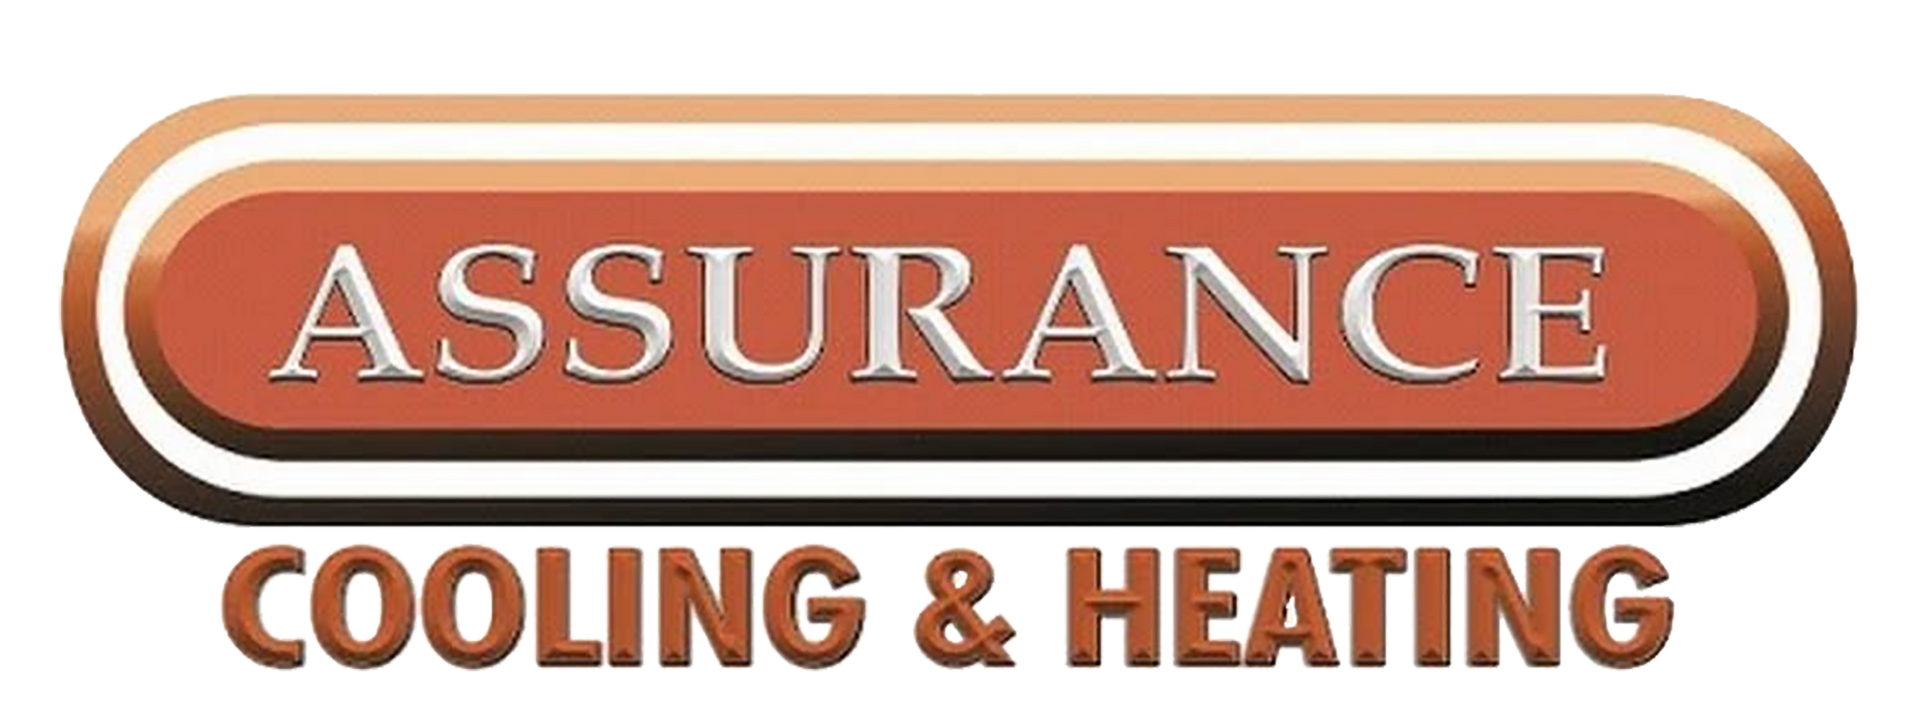 Assurance Cooling & Heating logo